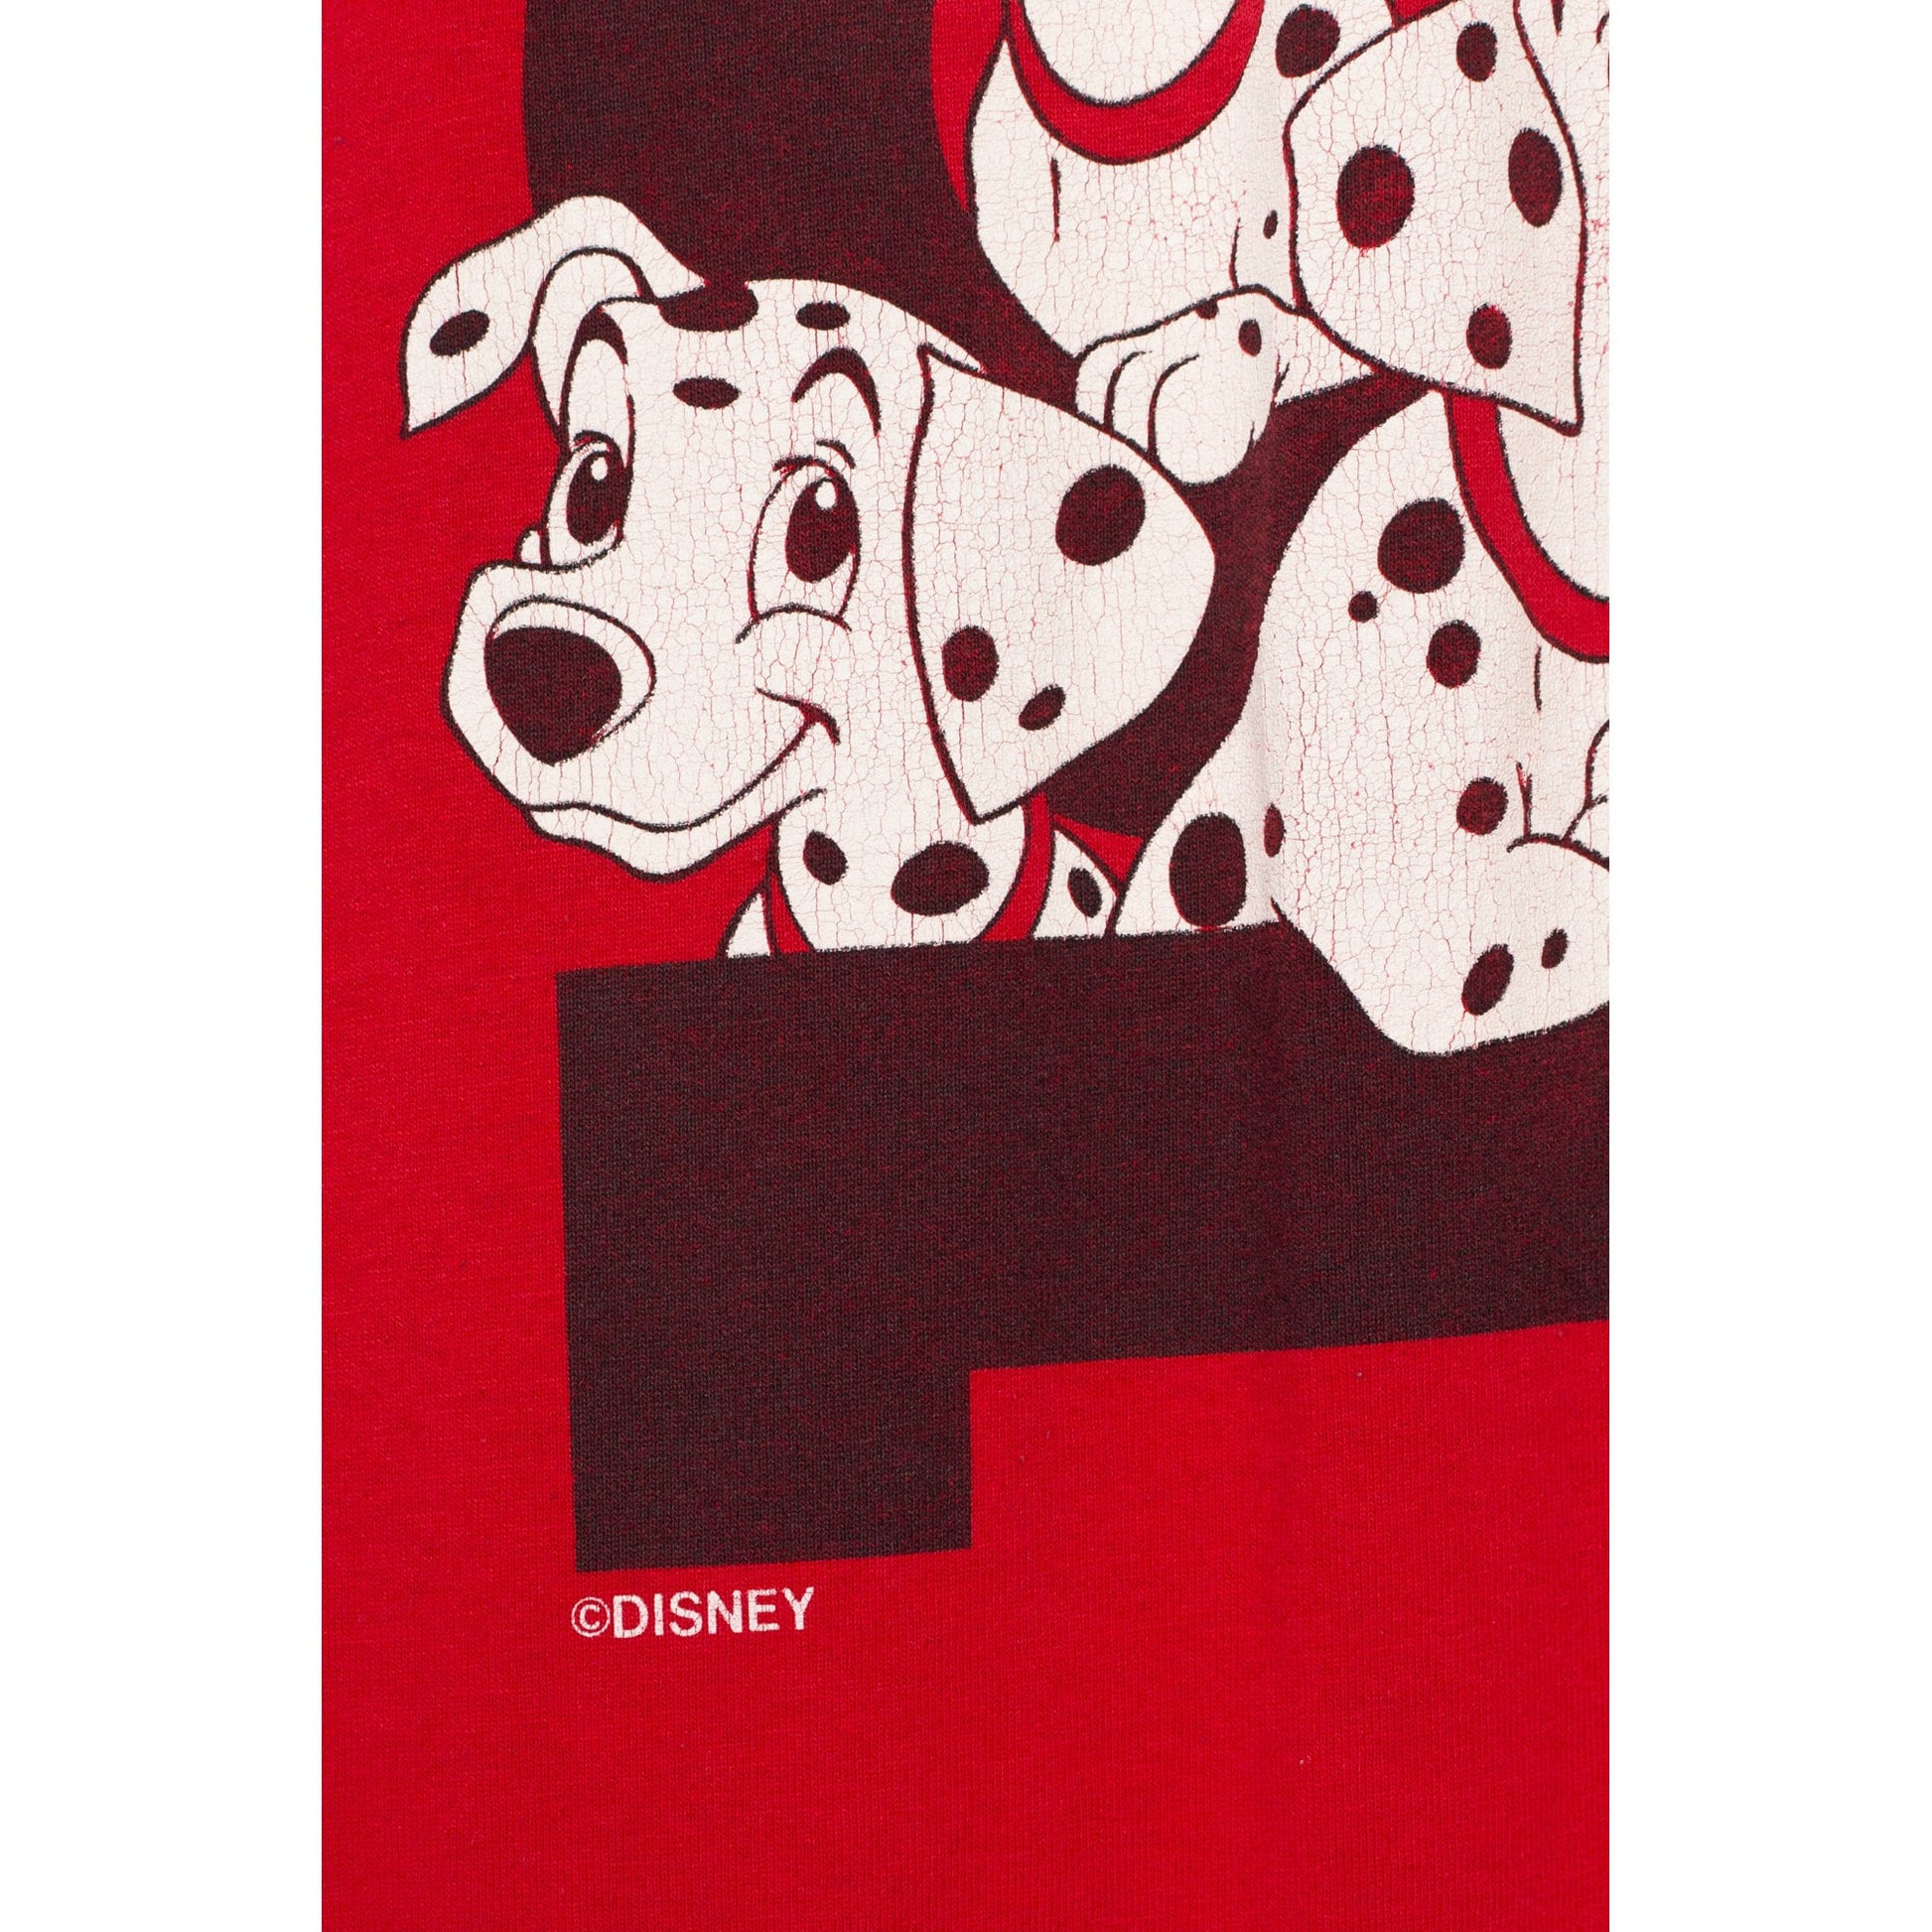 One Size 90s 101 Dalmatians Red T Shirt Dress | Vintage Disney Cartoon Graphic Oversize Sleep Shirt